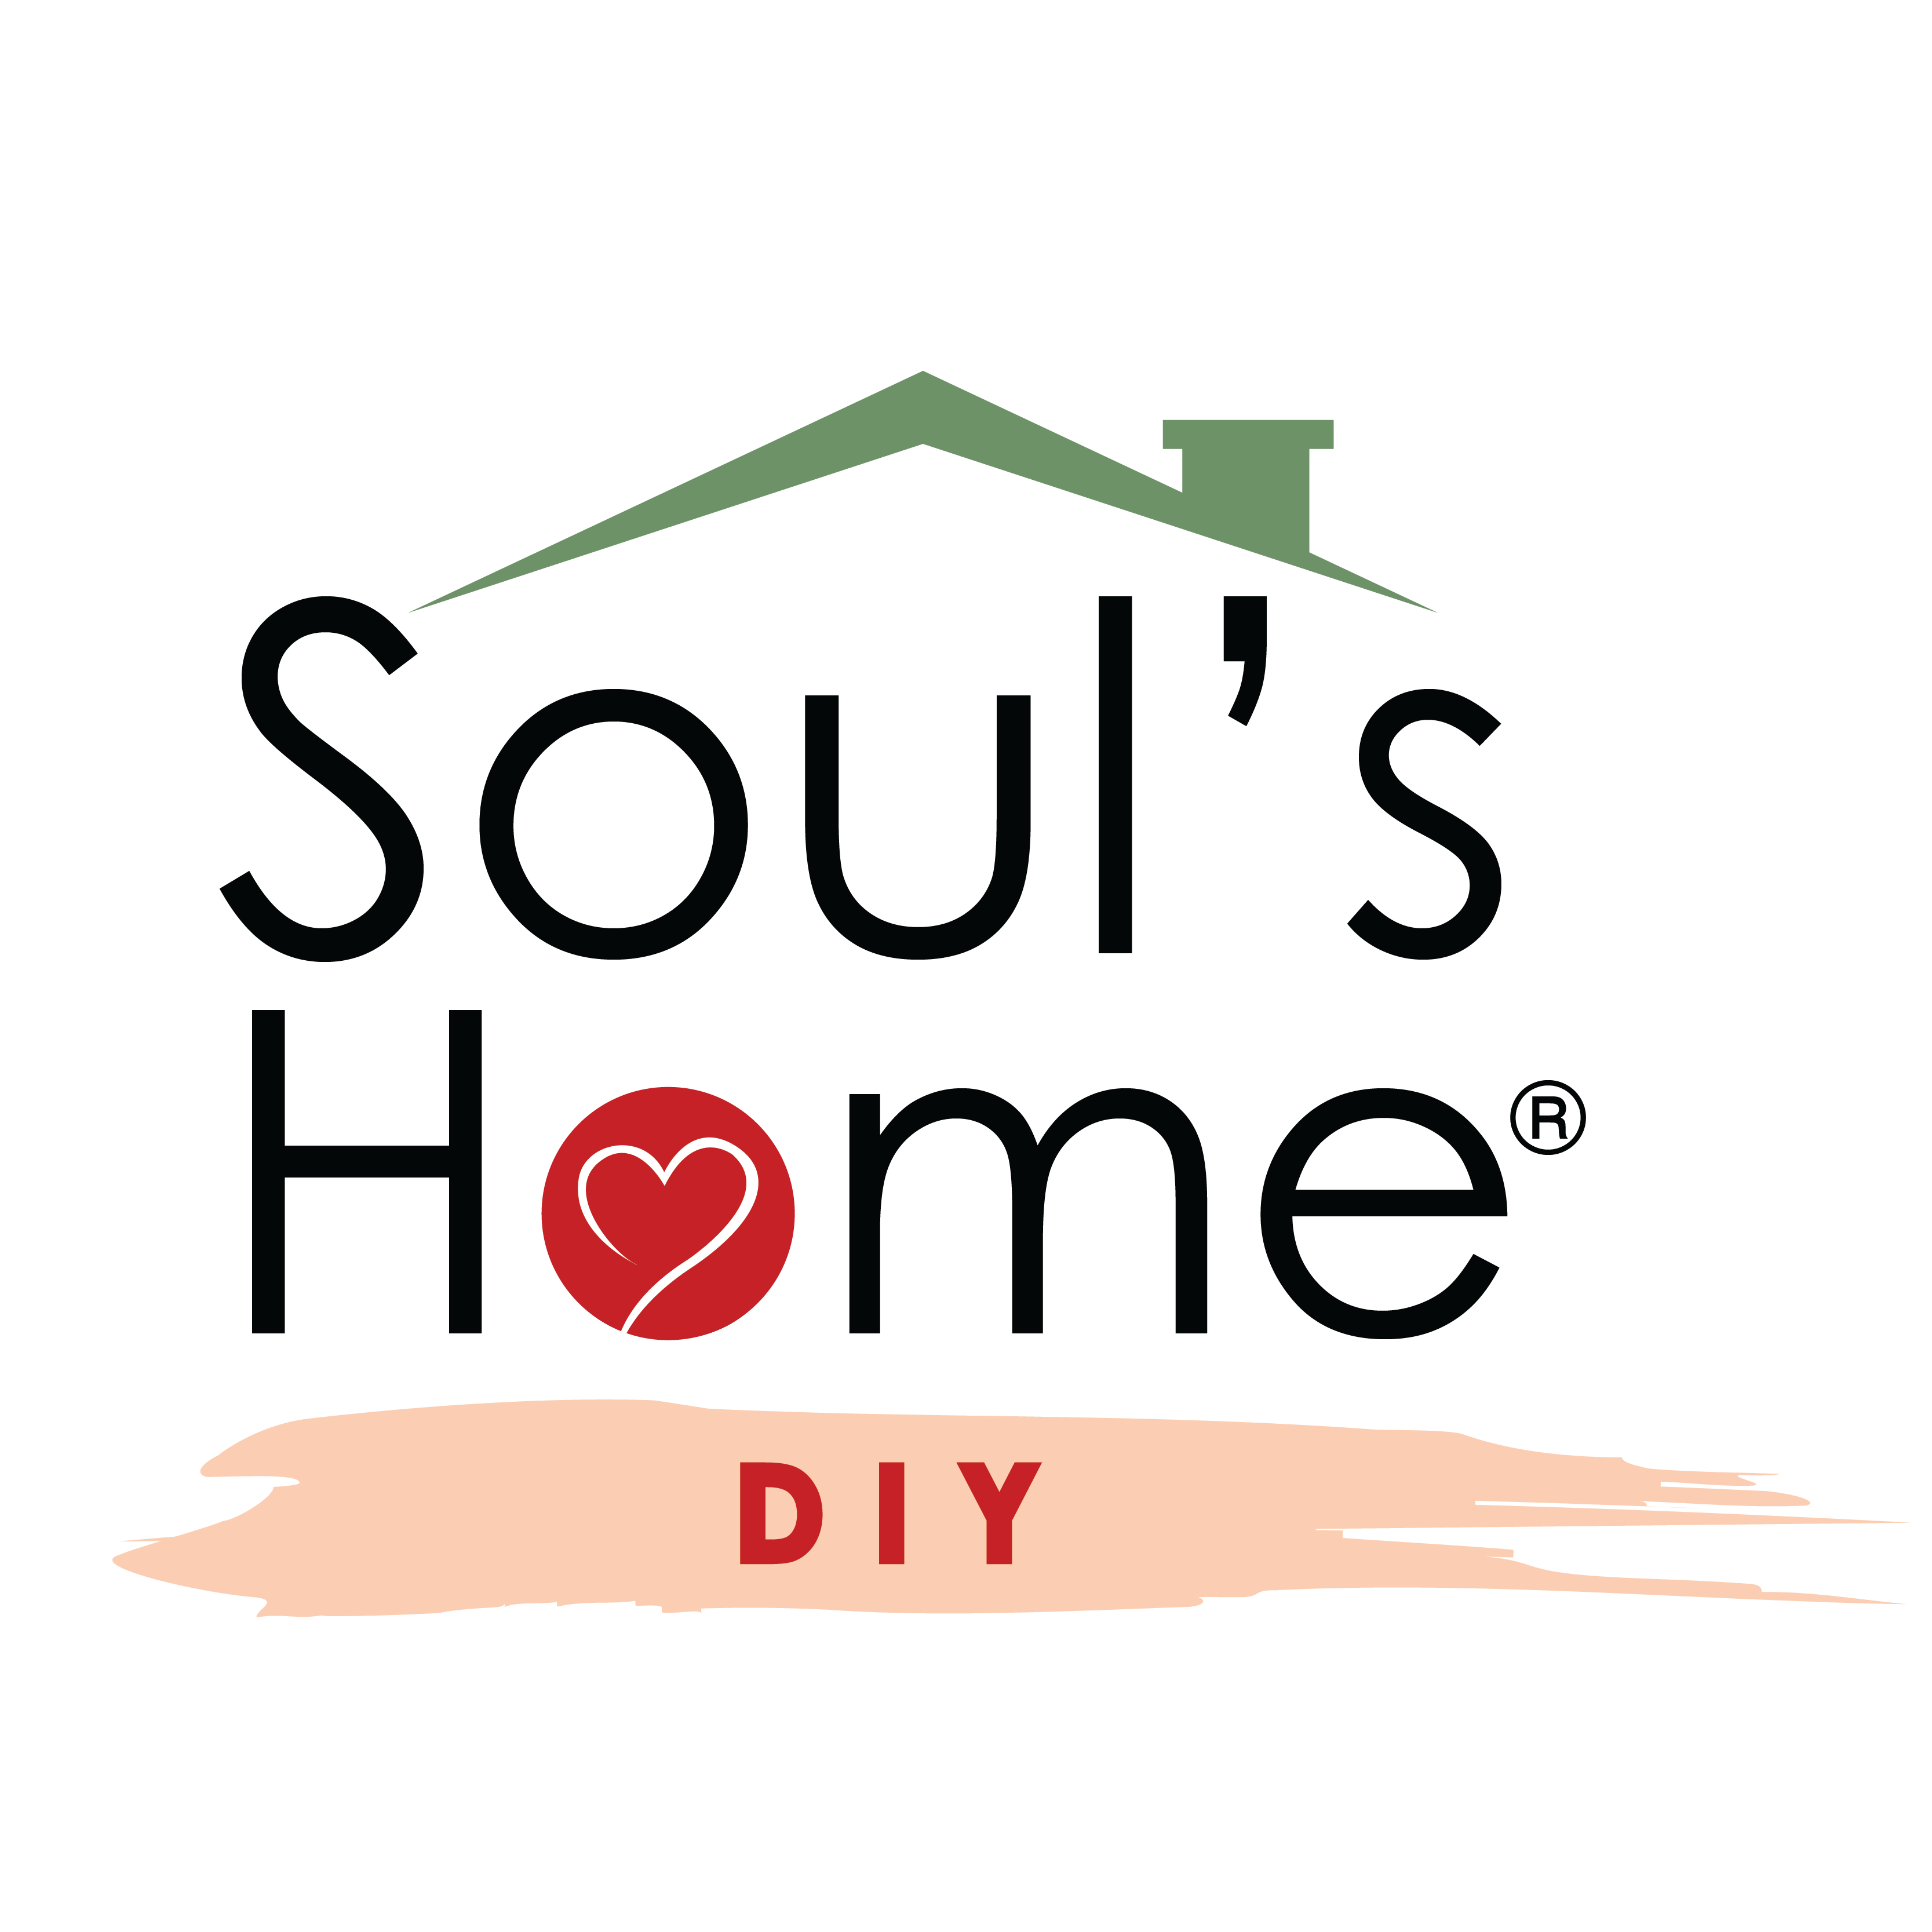 Souls Home DIY